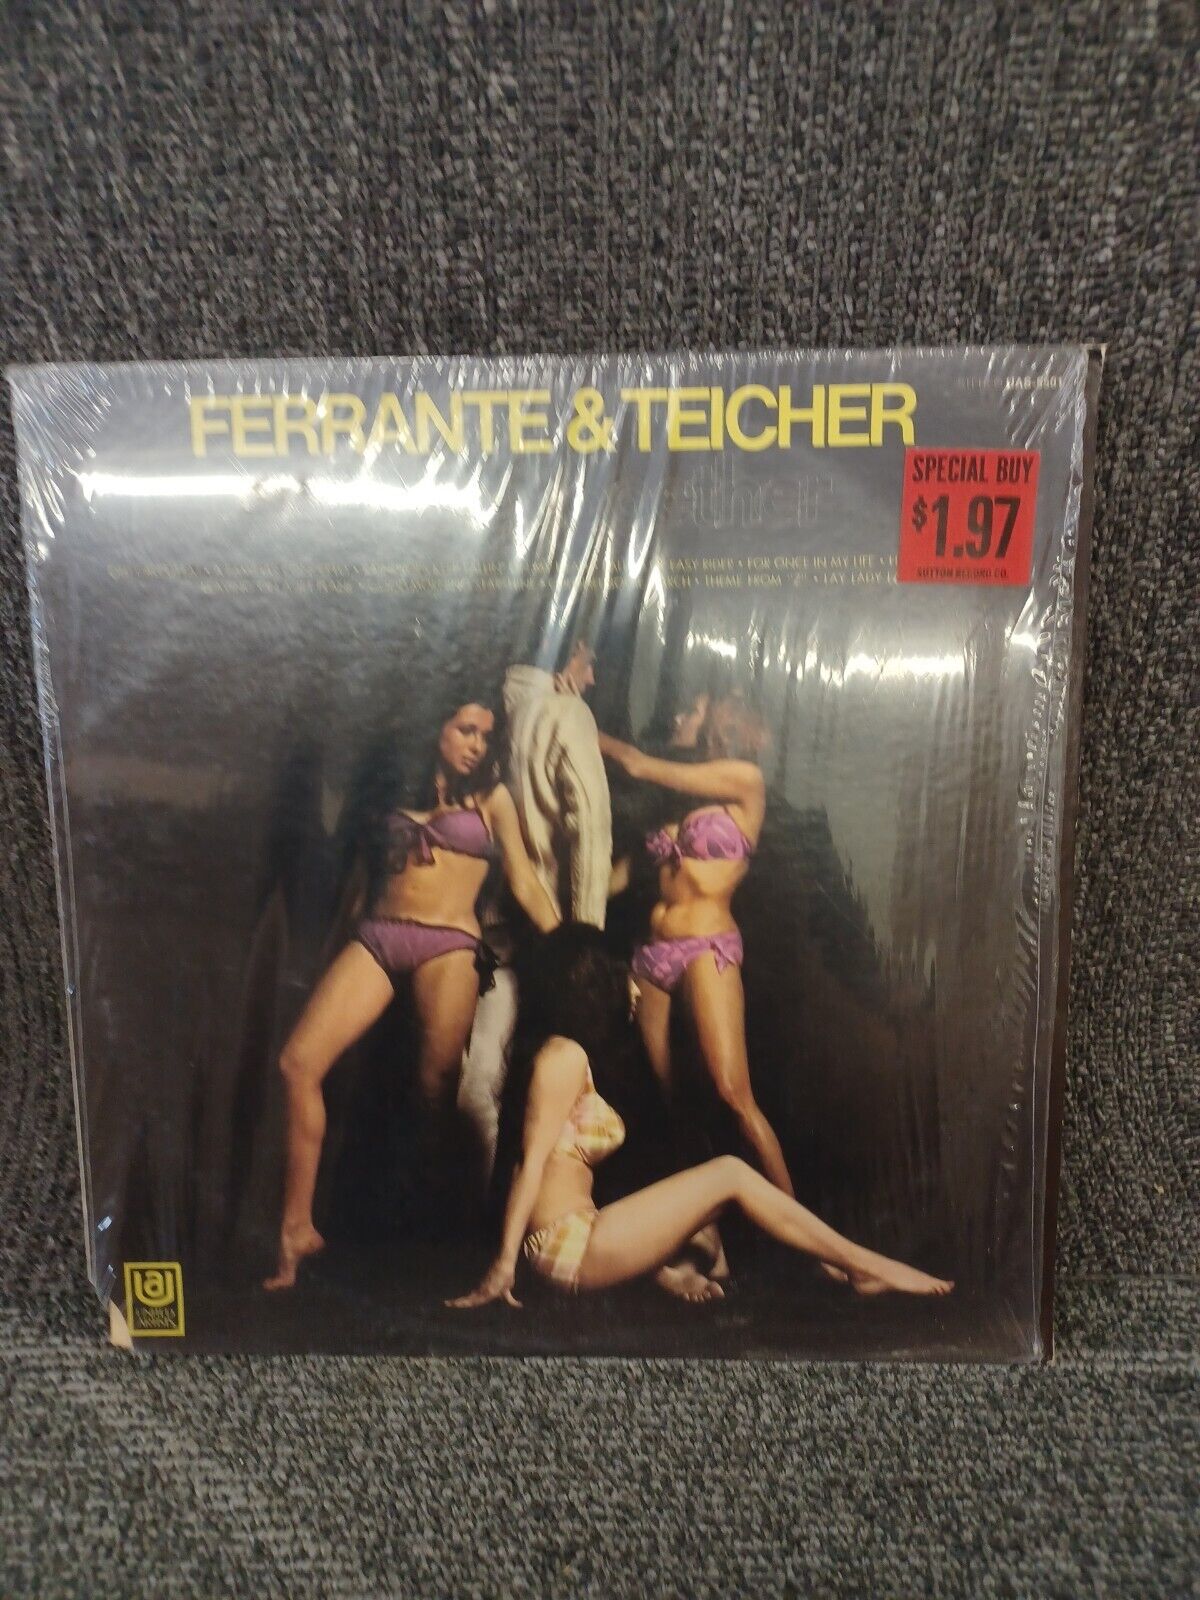 Vintage Ferante & Teicher Record